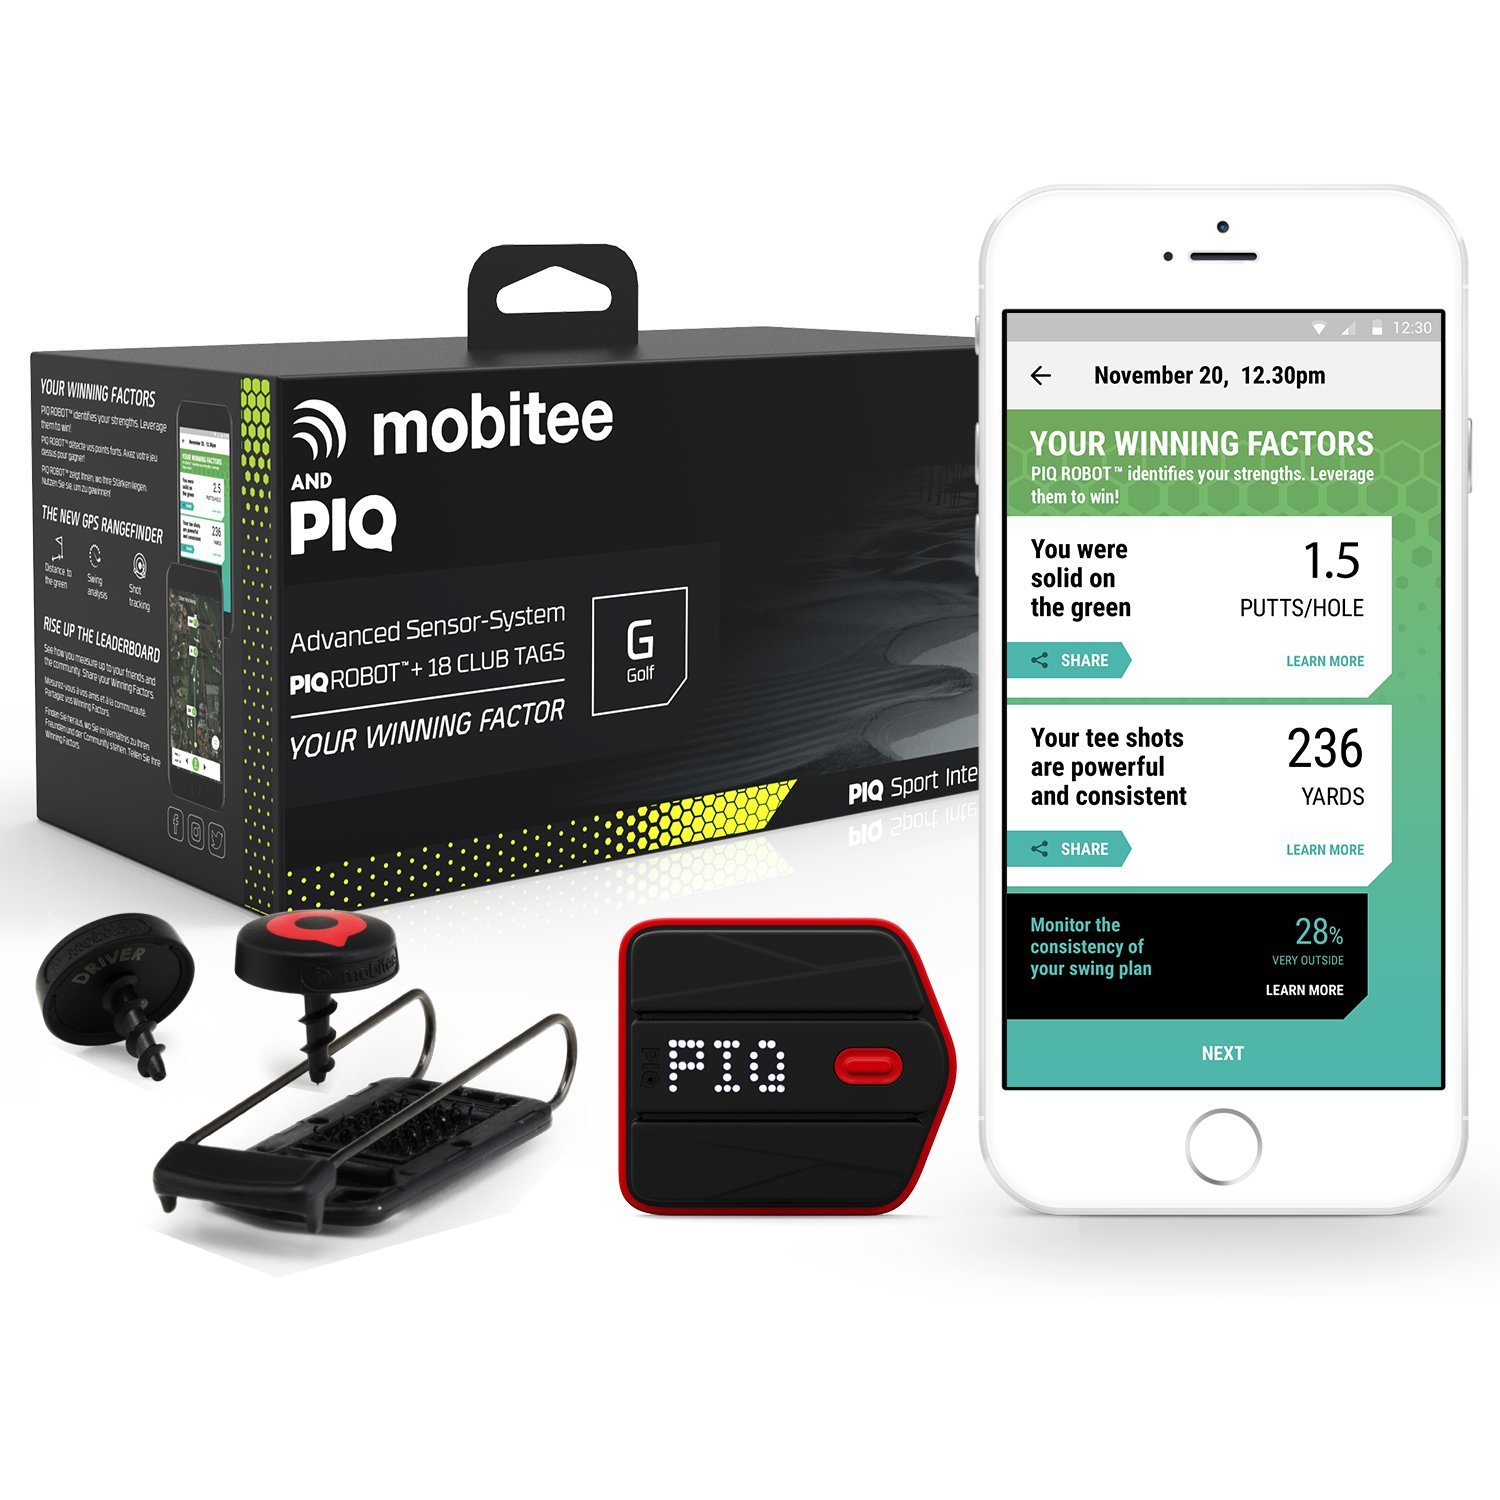 Mobitee & PIQ Wearable Golf Sport Tracker - Golf Course GPS Rangefinder On Your Wrist, Club GPS Shot Tracker, Club Shot Statistics, Golf Swing Ana